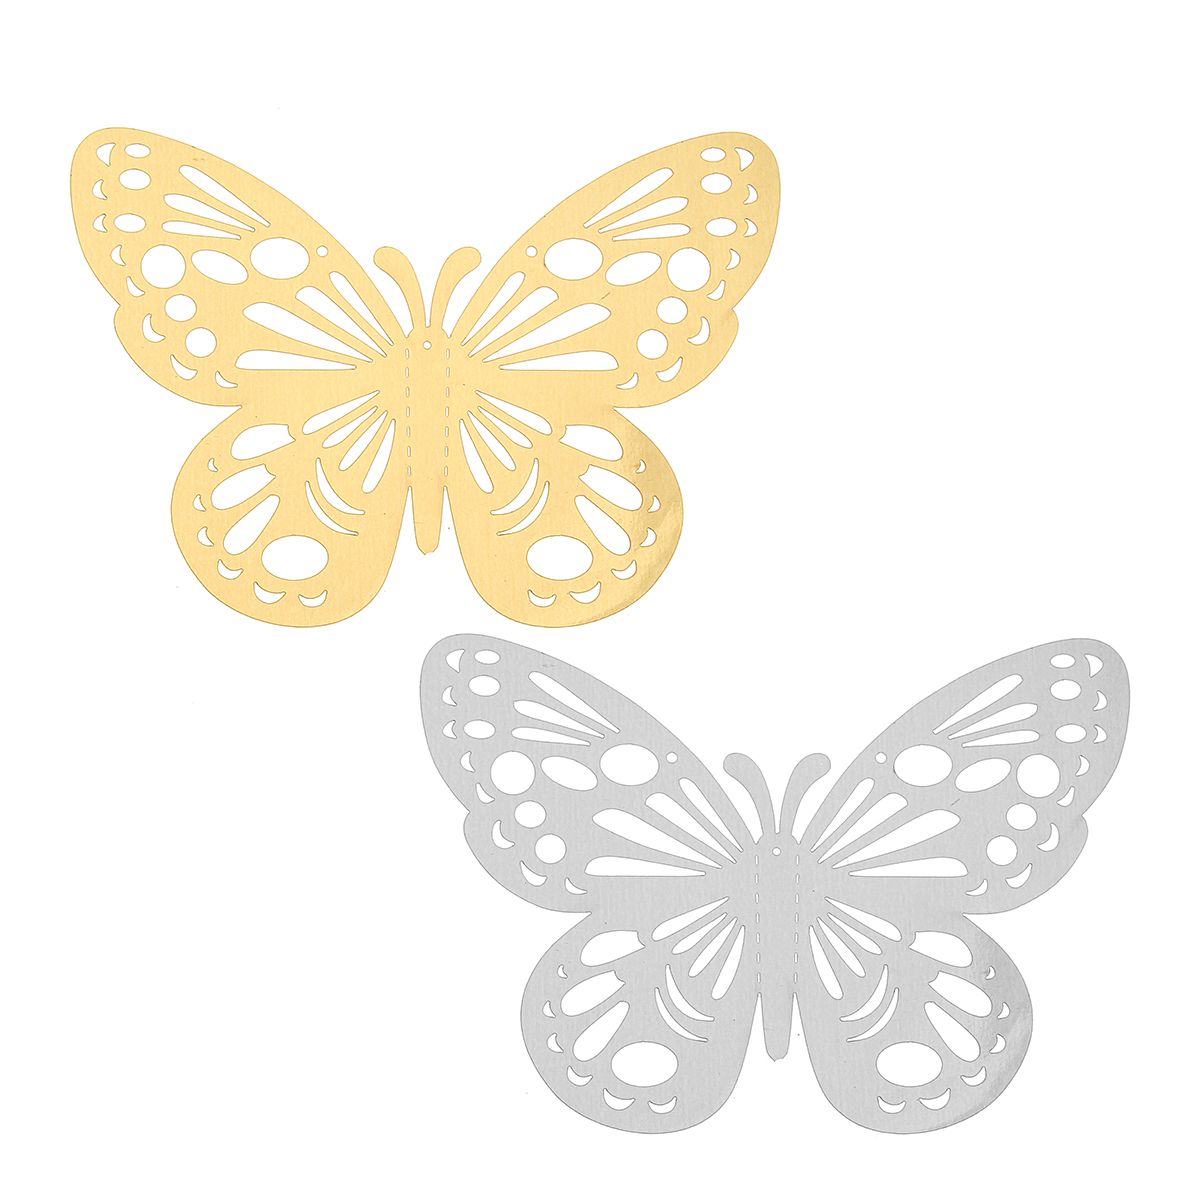 12Pcs-3D-Butterfly-Wall-Sticker-Home-Decor-DIY-Butterfly-Fridge-Sticker-Party-Wedding-Room-Decor-1465769